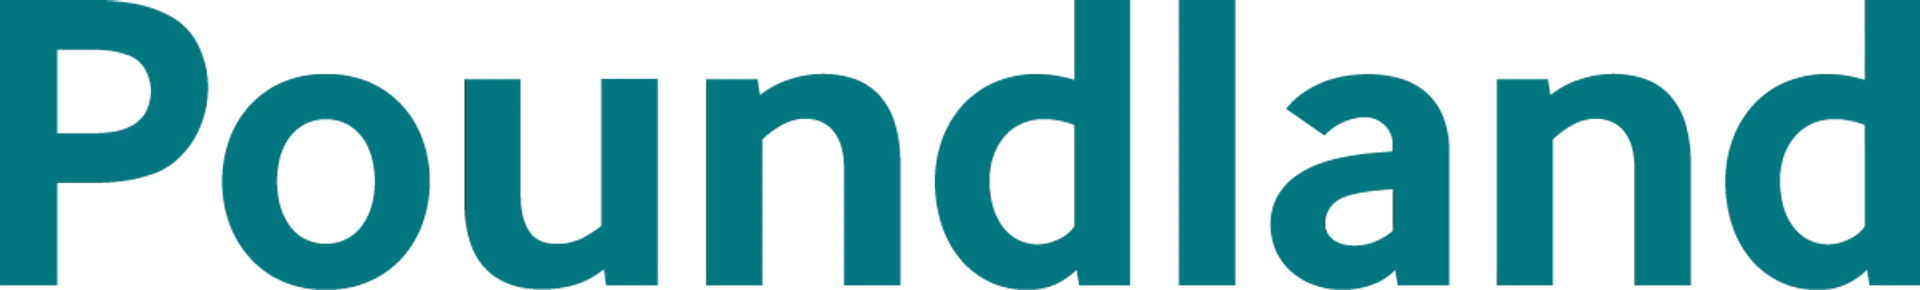 POUNDLAND logo